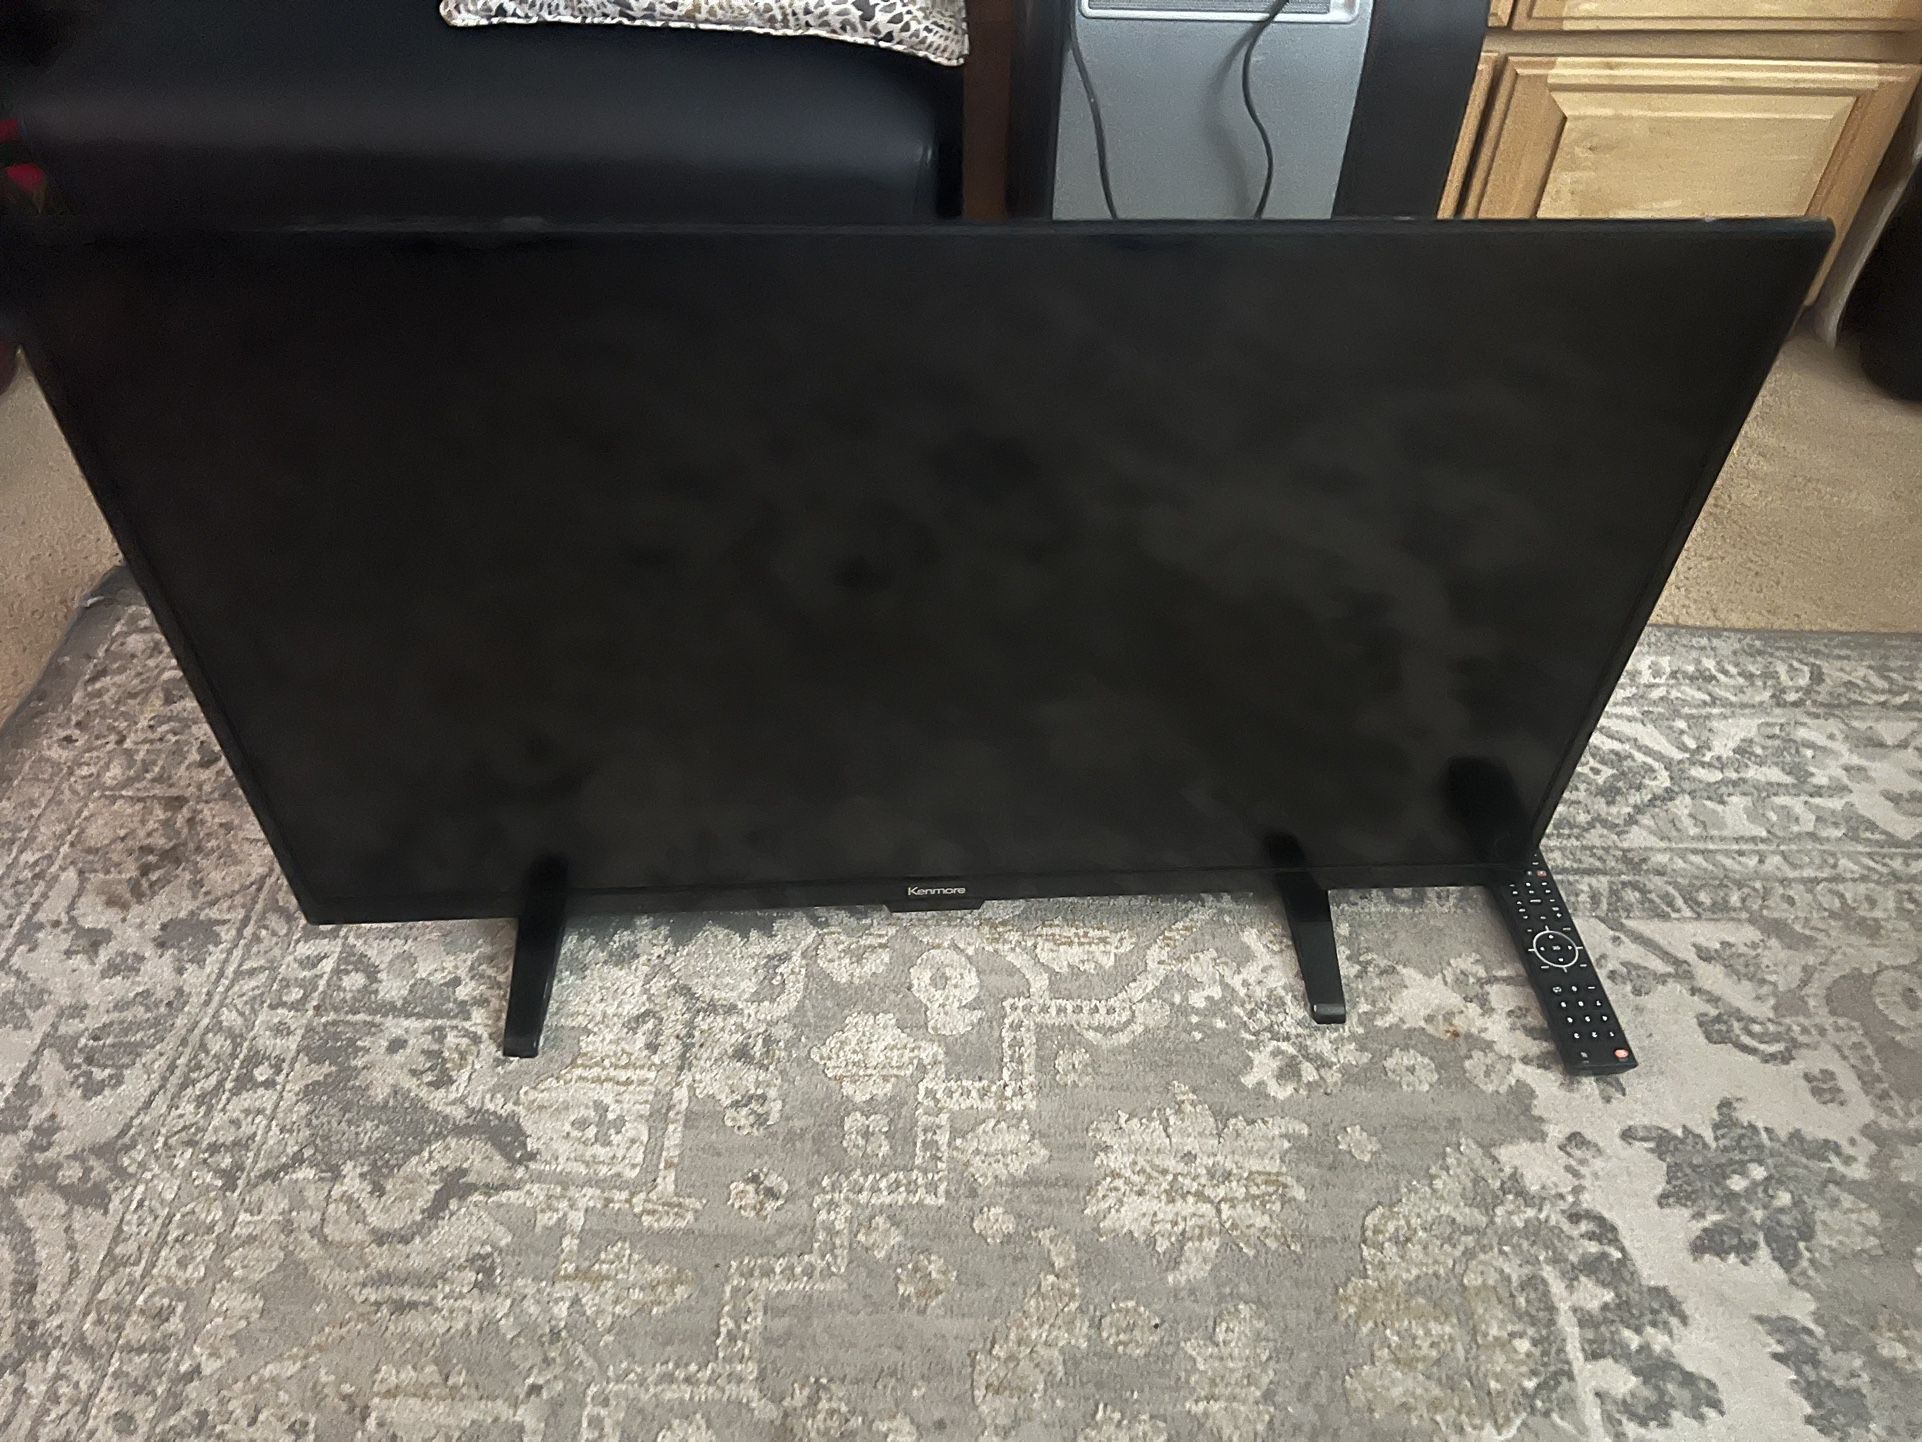 Kenmore 40-inch TV 